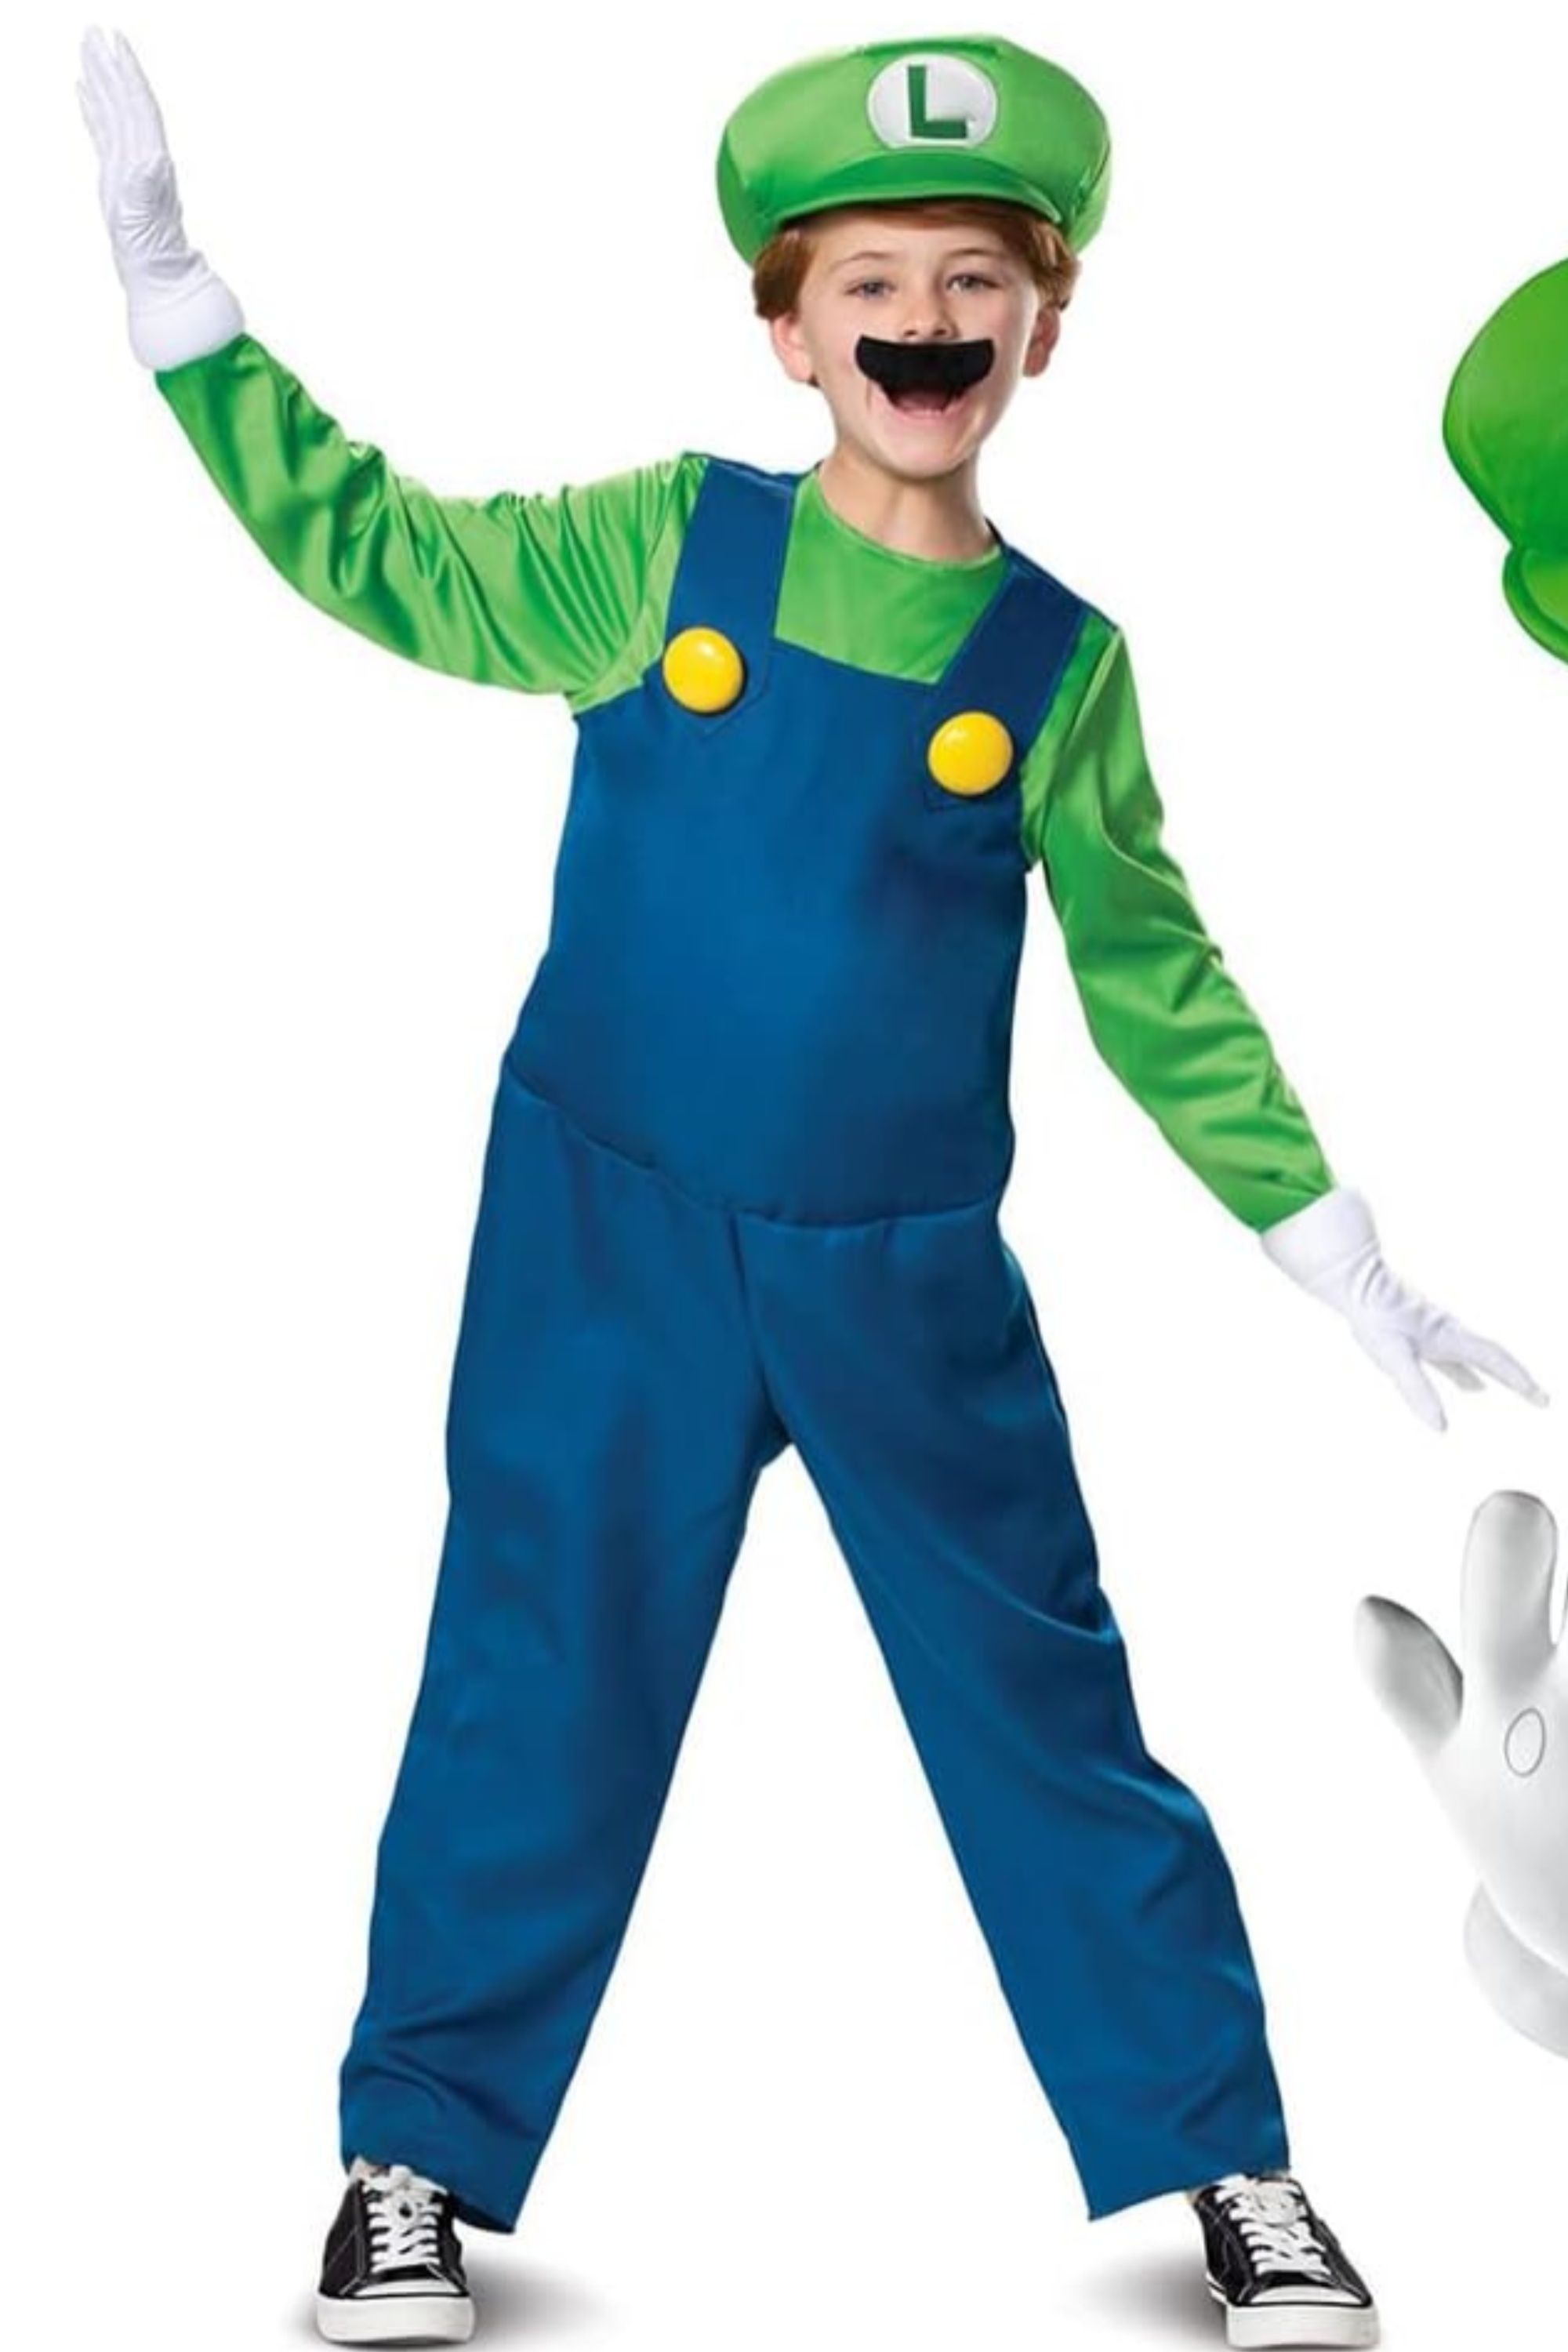 kid wearing a luigi costume